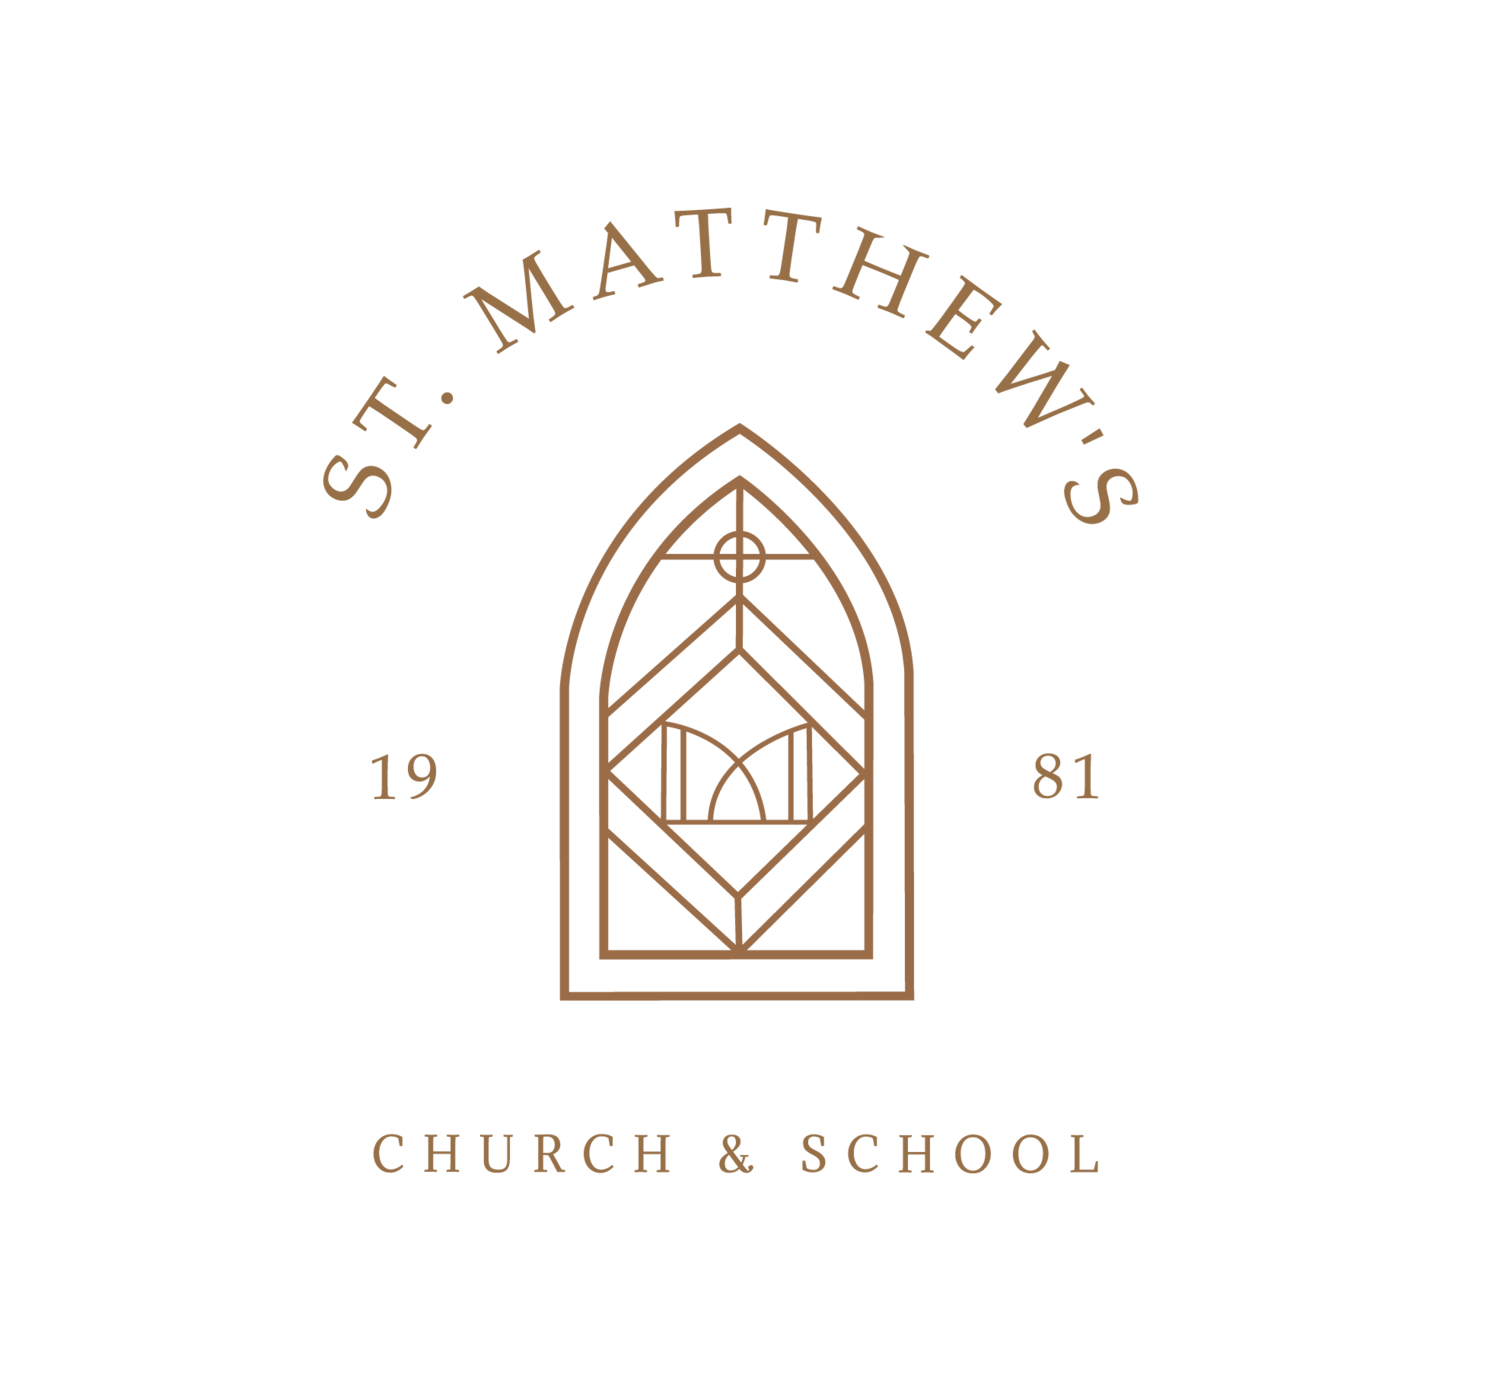 St Matthew's Church